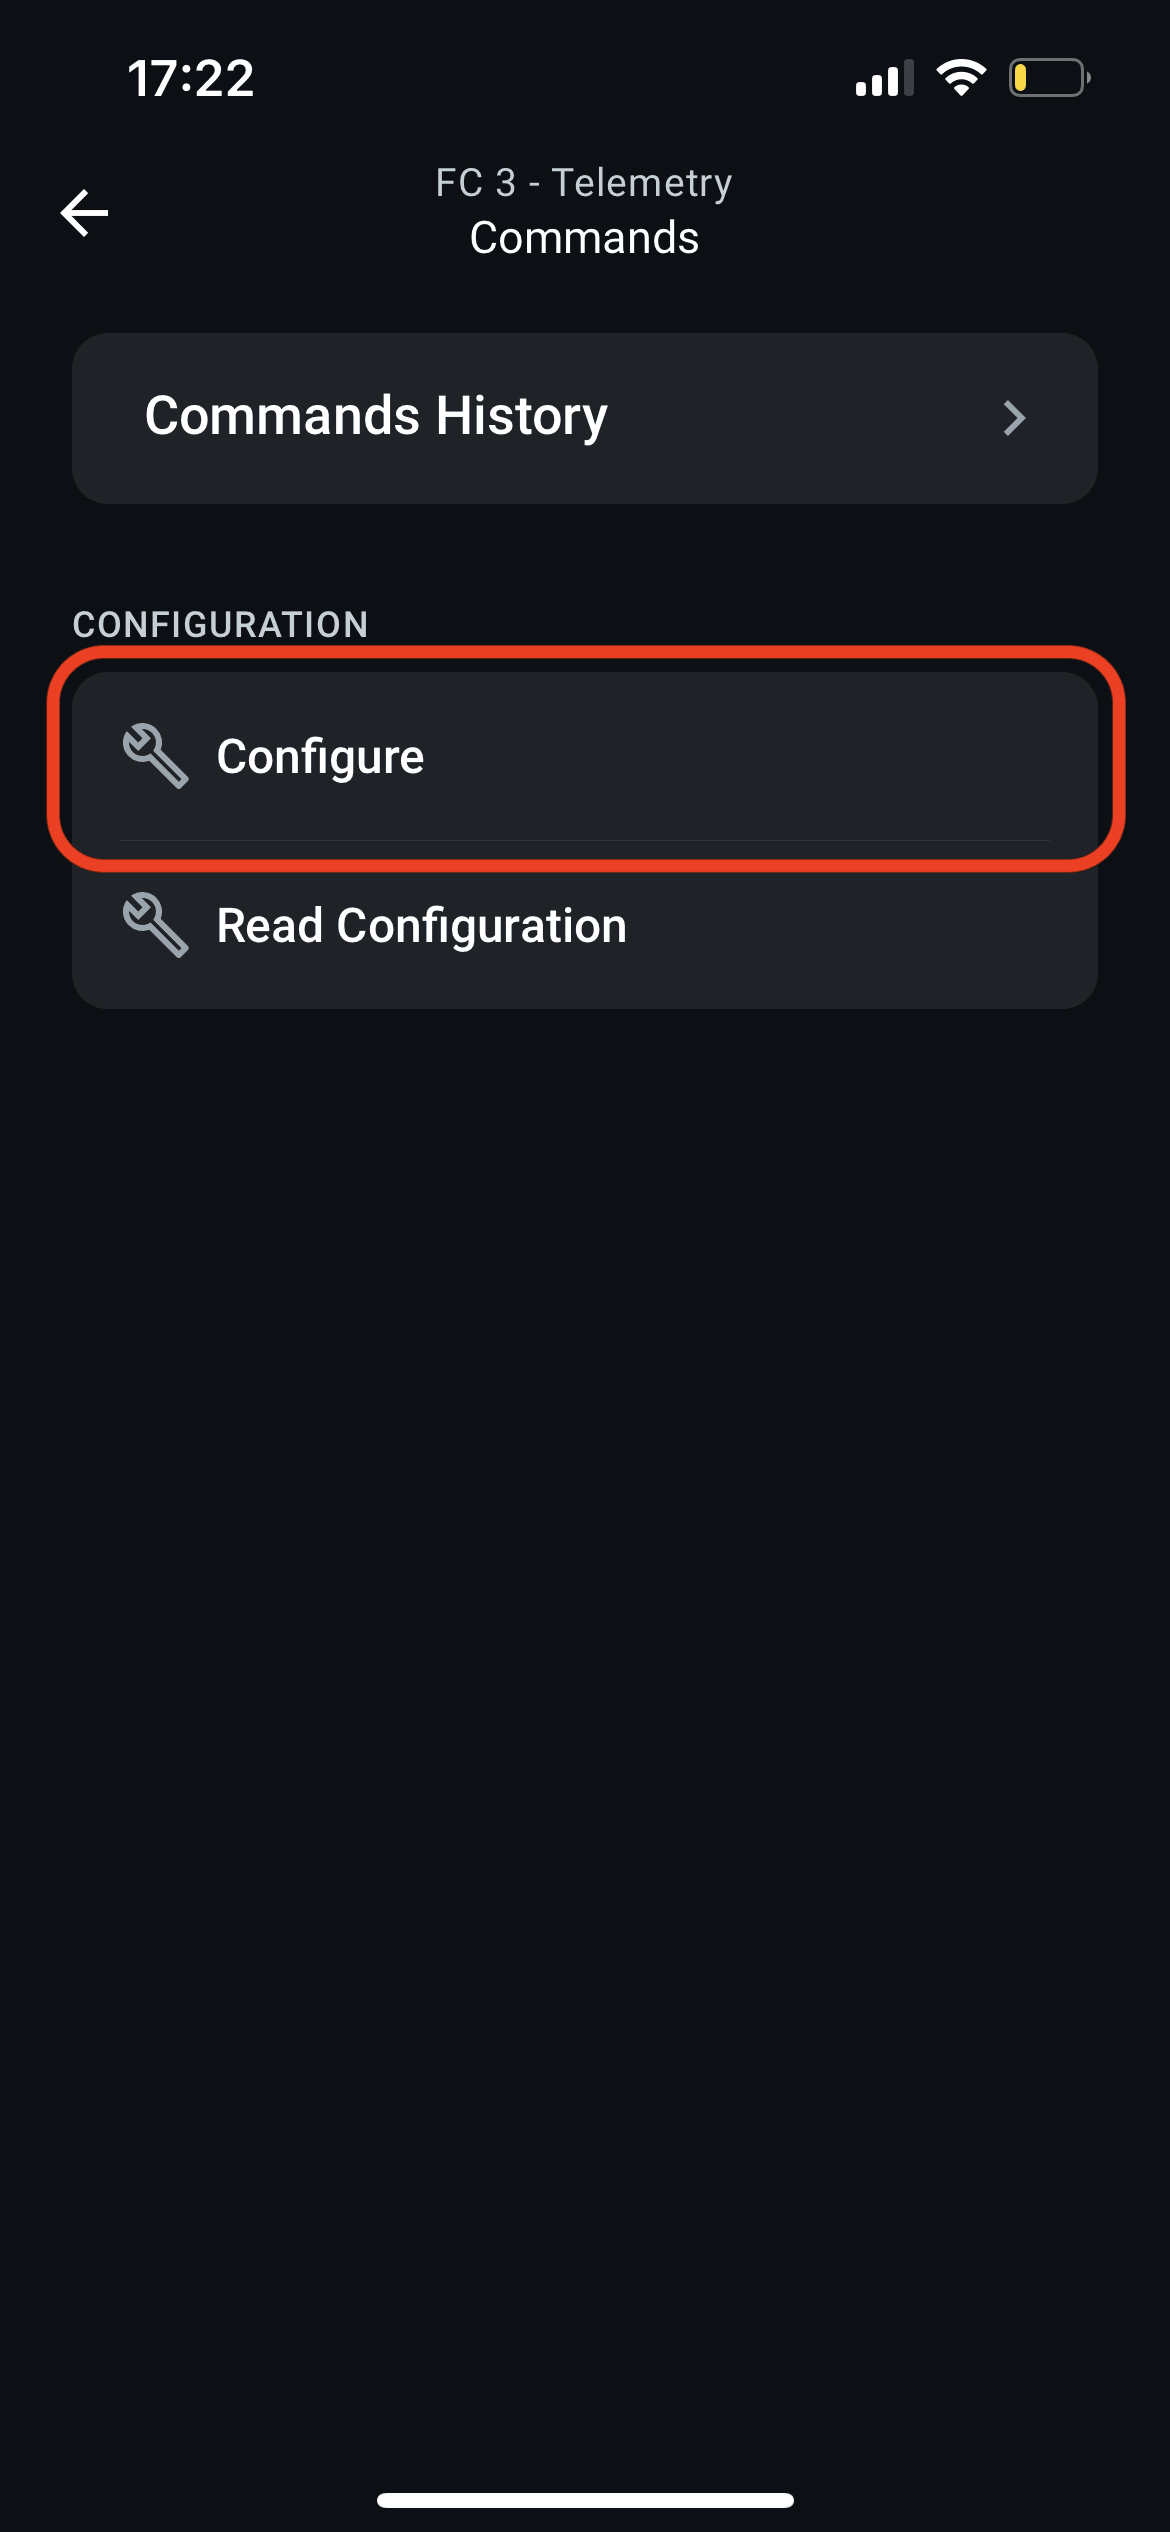 Select Configure command.